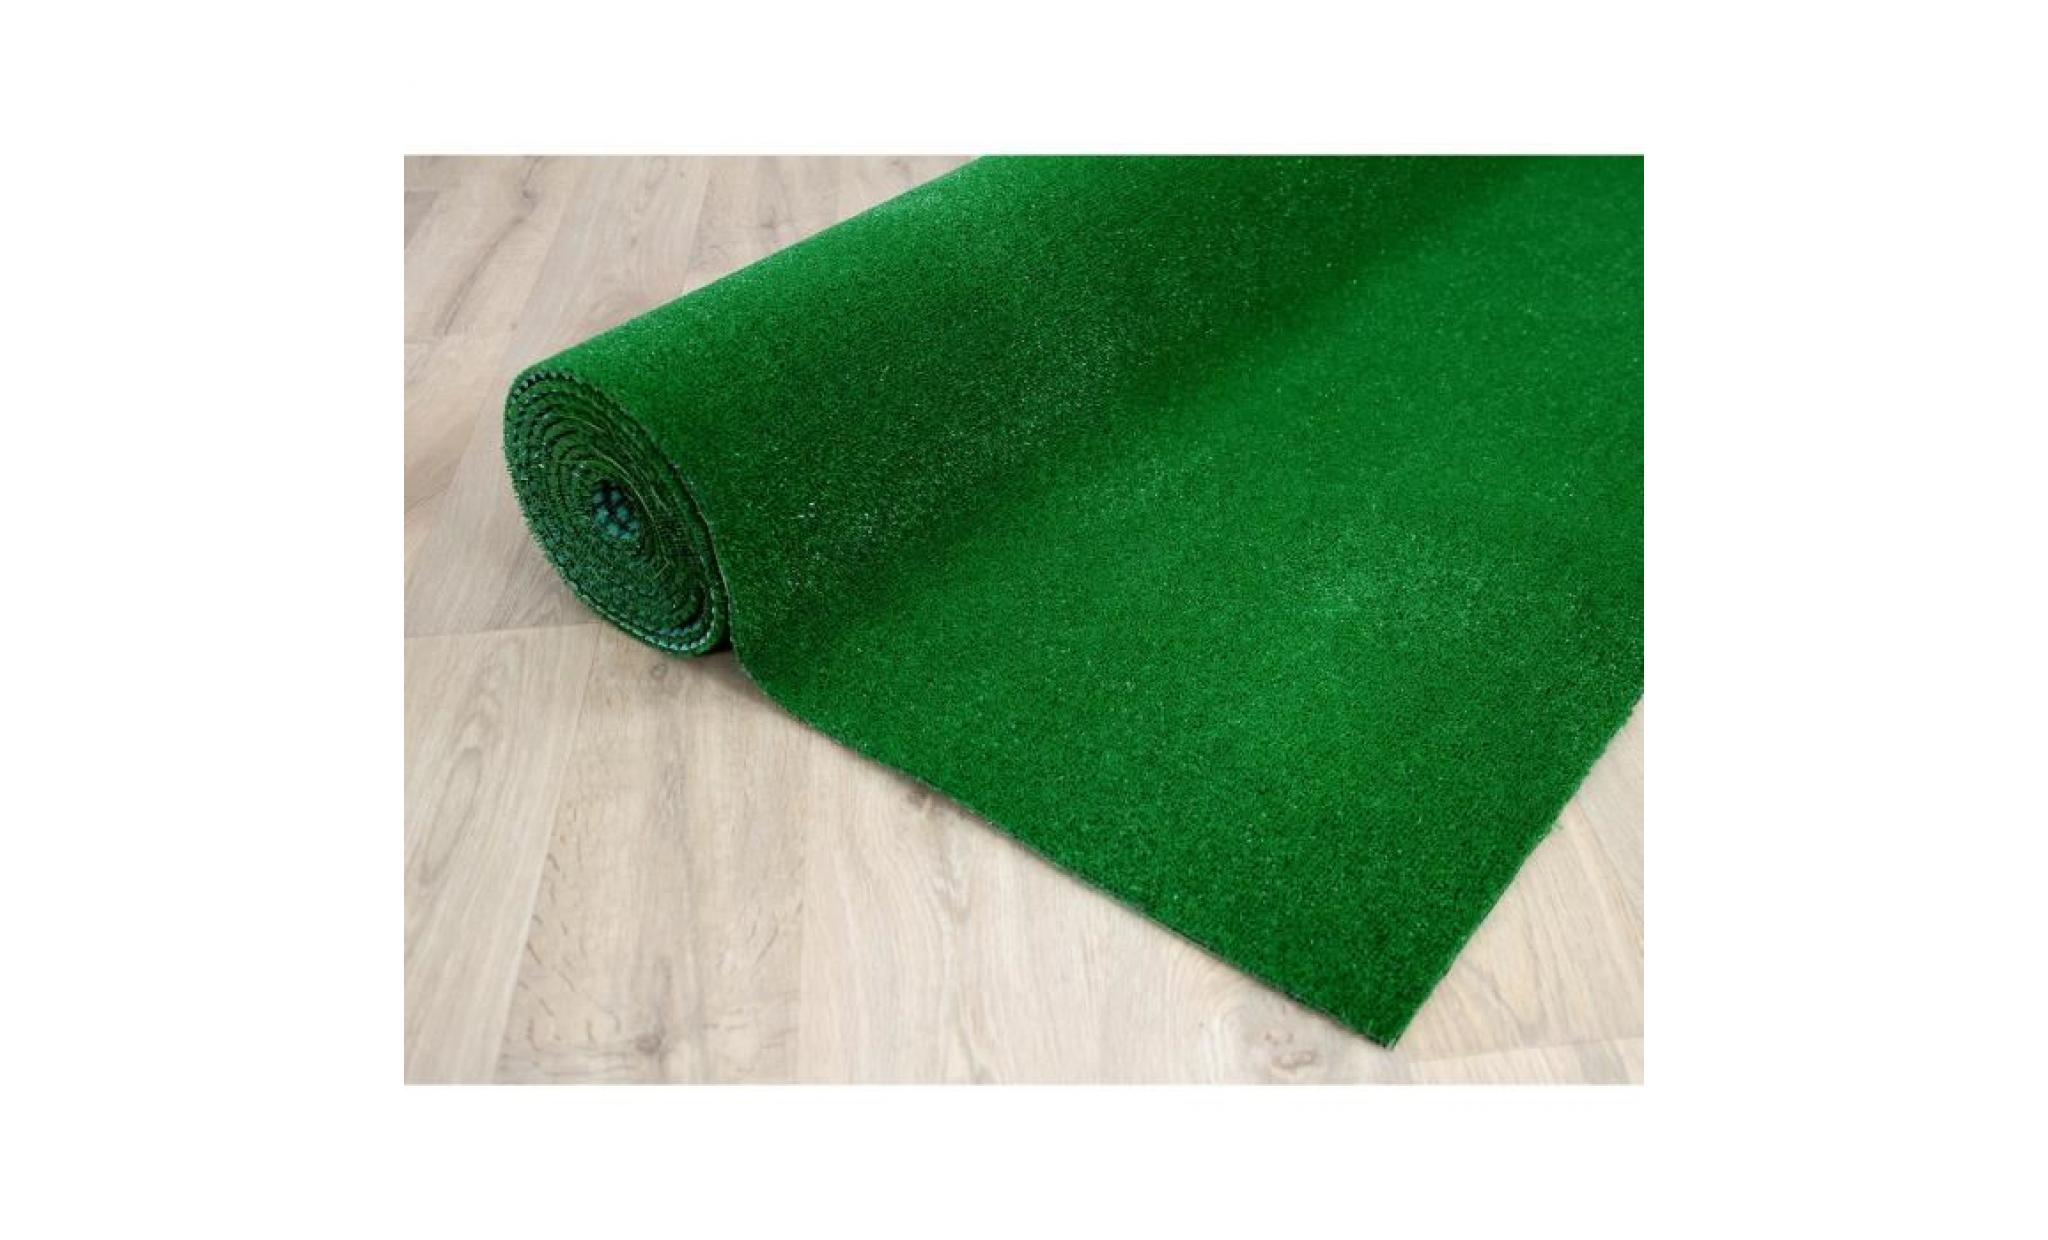 york   tapis type gazon artificiel avec nubs – pour jardin, terrasse, balcon   vert   [200x50 cm]